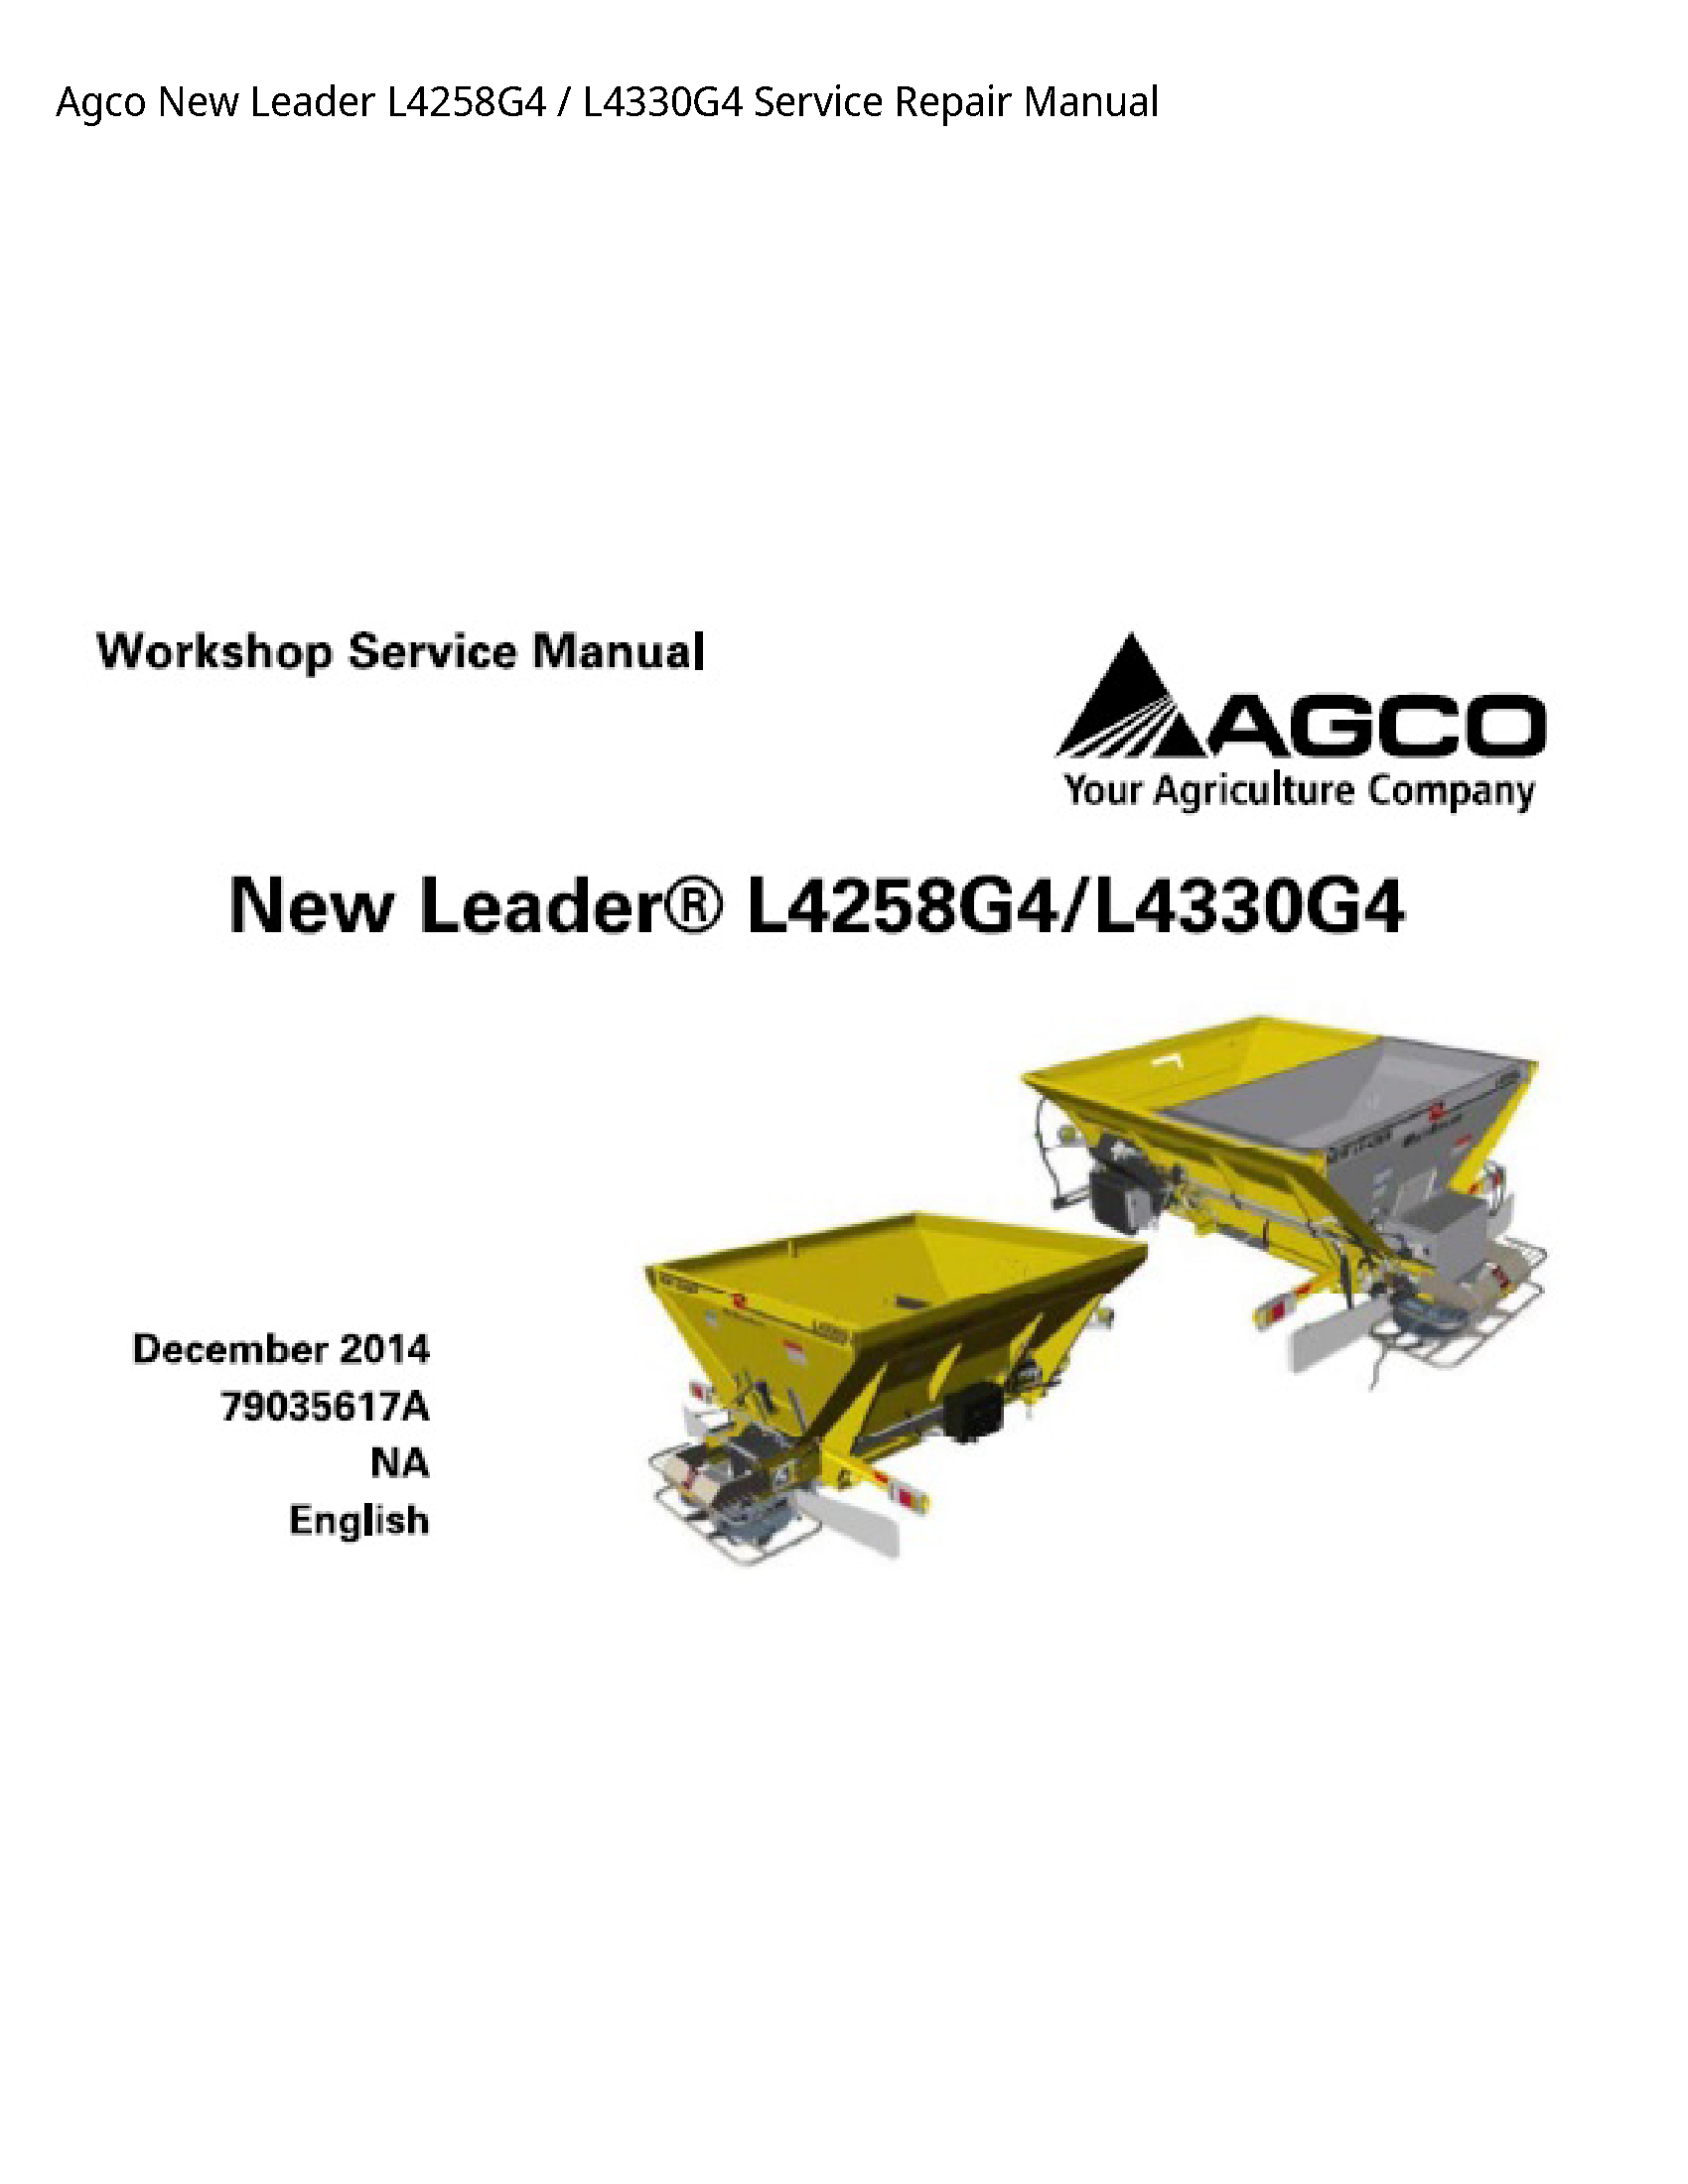 AGCO L4258G4 New Leader manual